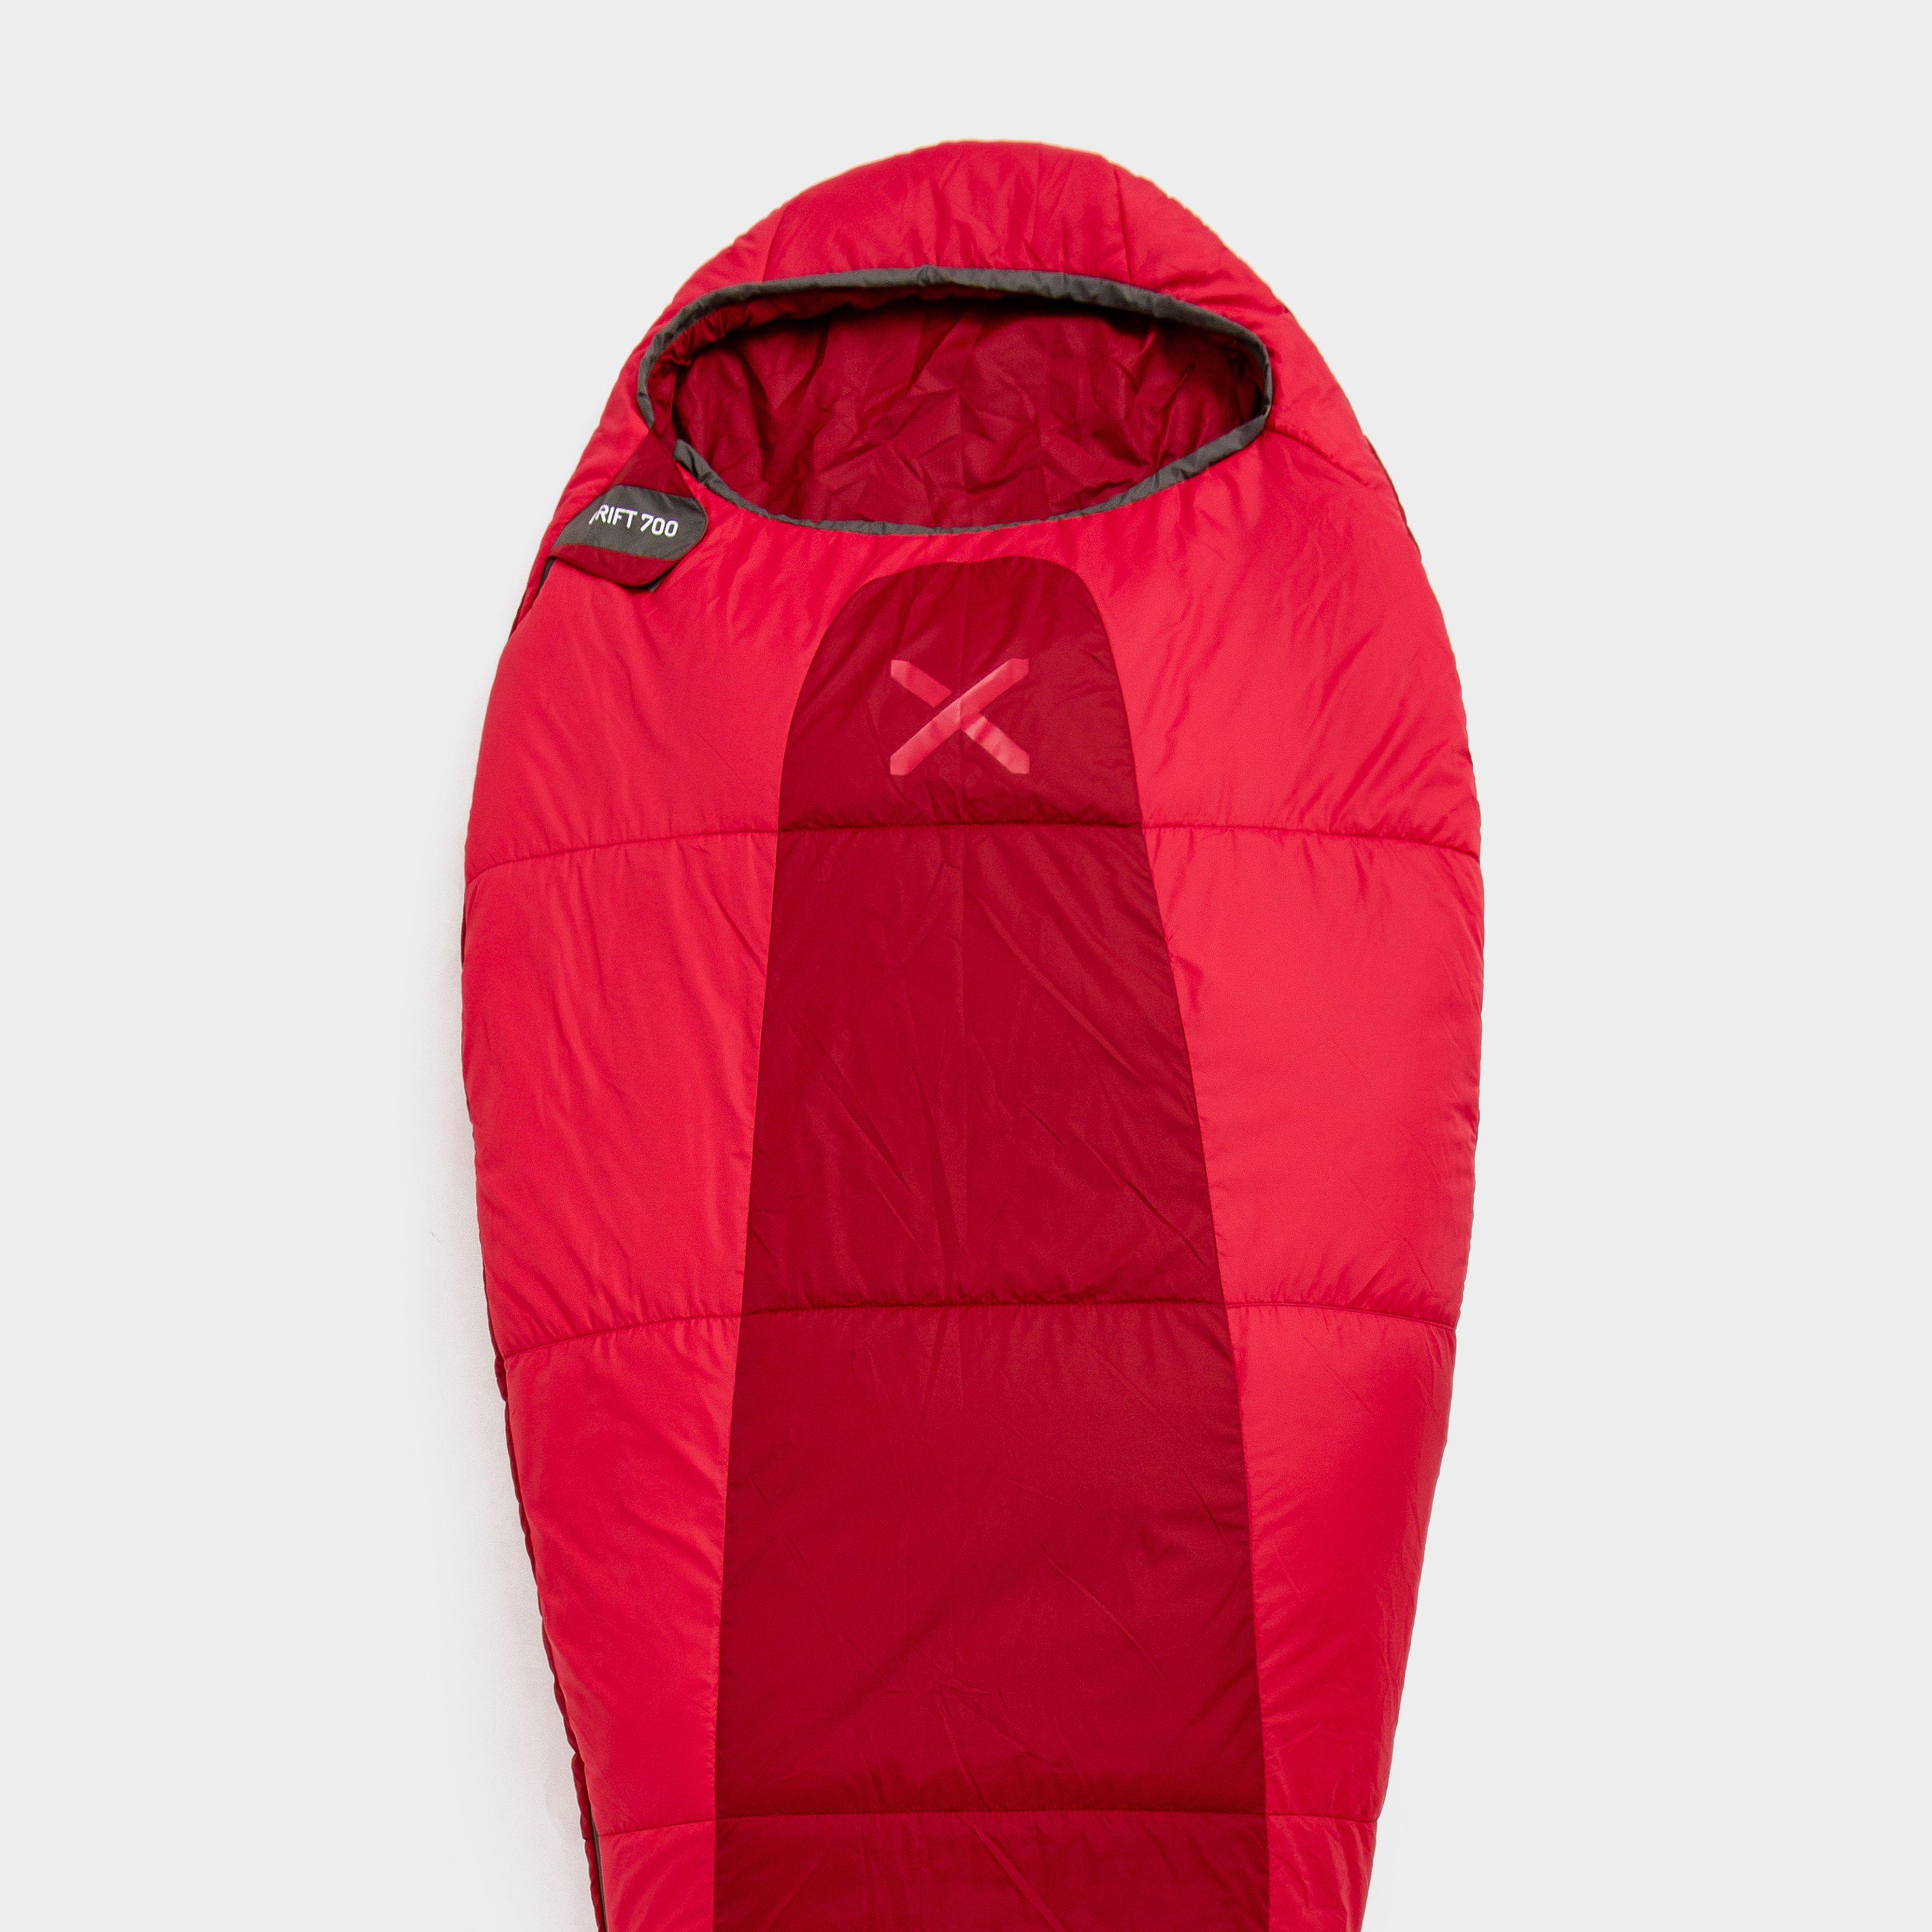 OEX Oex Drift 700 Sleeping Bag - Red, Red